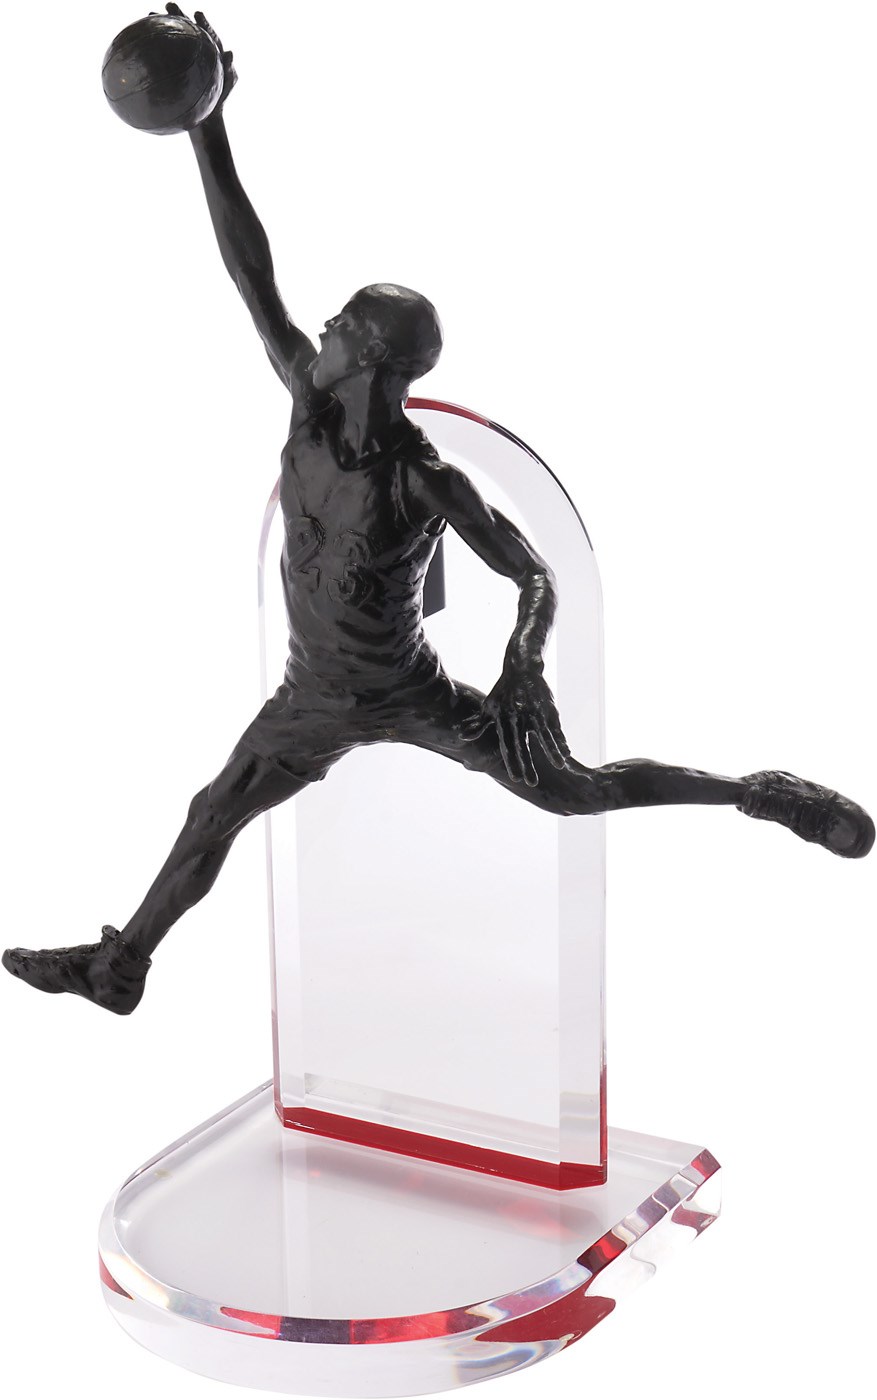 Michael Jordan Limited Edition Bronze by Steve Landis (1/12)